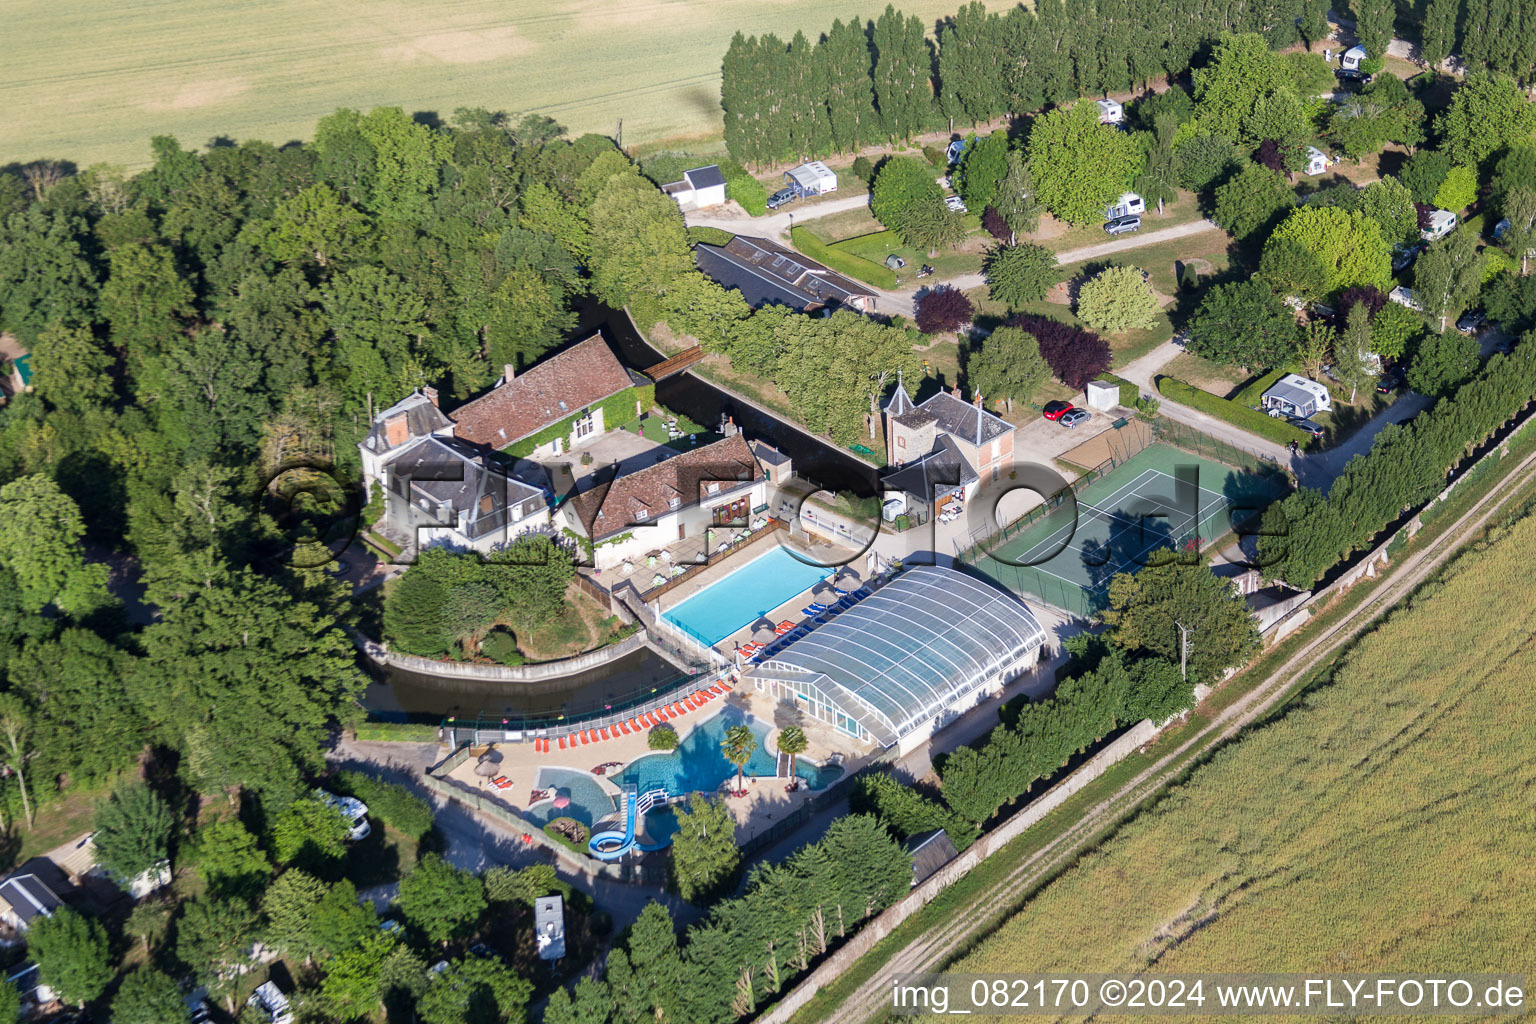 Aerial photograpy of Holiday house plant of the Camping Capfun Chateau de la Grenouillere and Parc de la GrenouillA?re in Suevres in Centre-Val de Loire, France